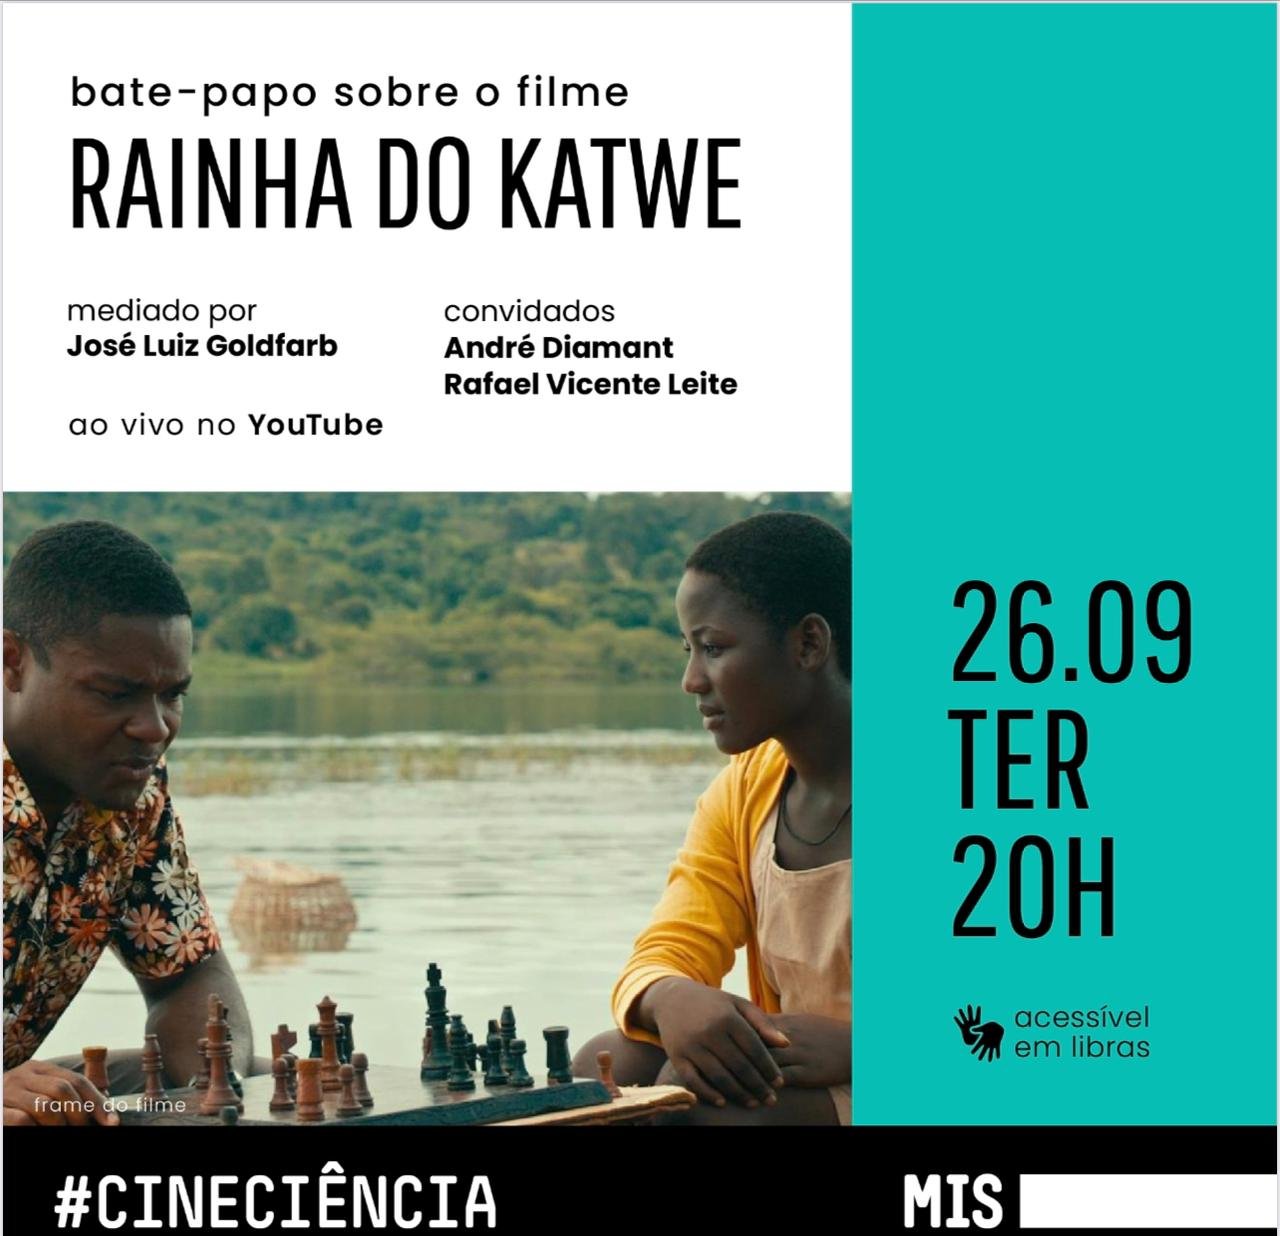 Bate-papo sobre o filme Rainha do Katwe - Instituto Mario Schenberg